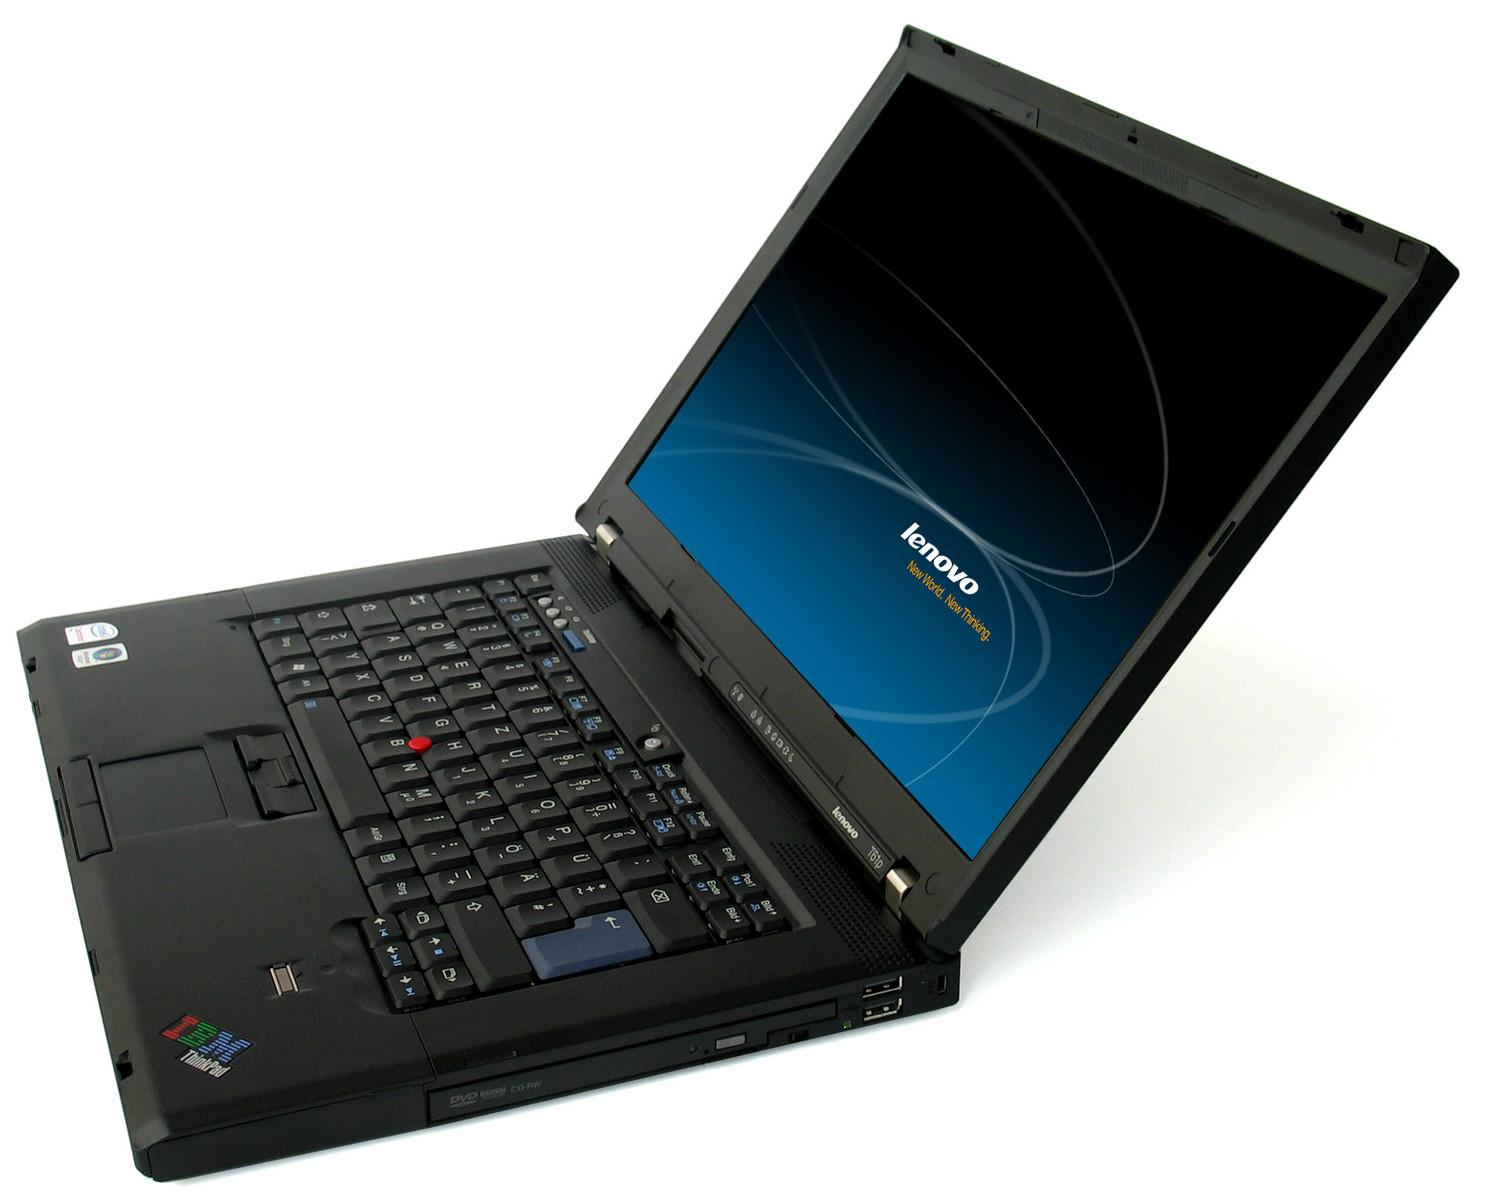 Lenovo ThinkPad T61p - Notebookcheck.net External Reviews